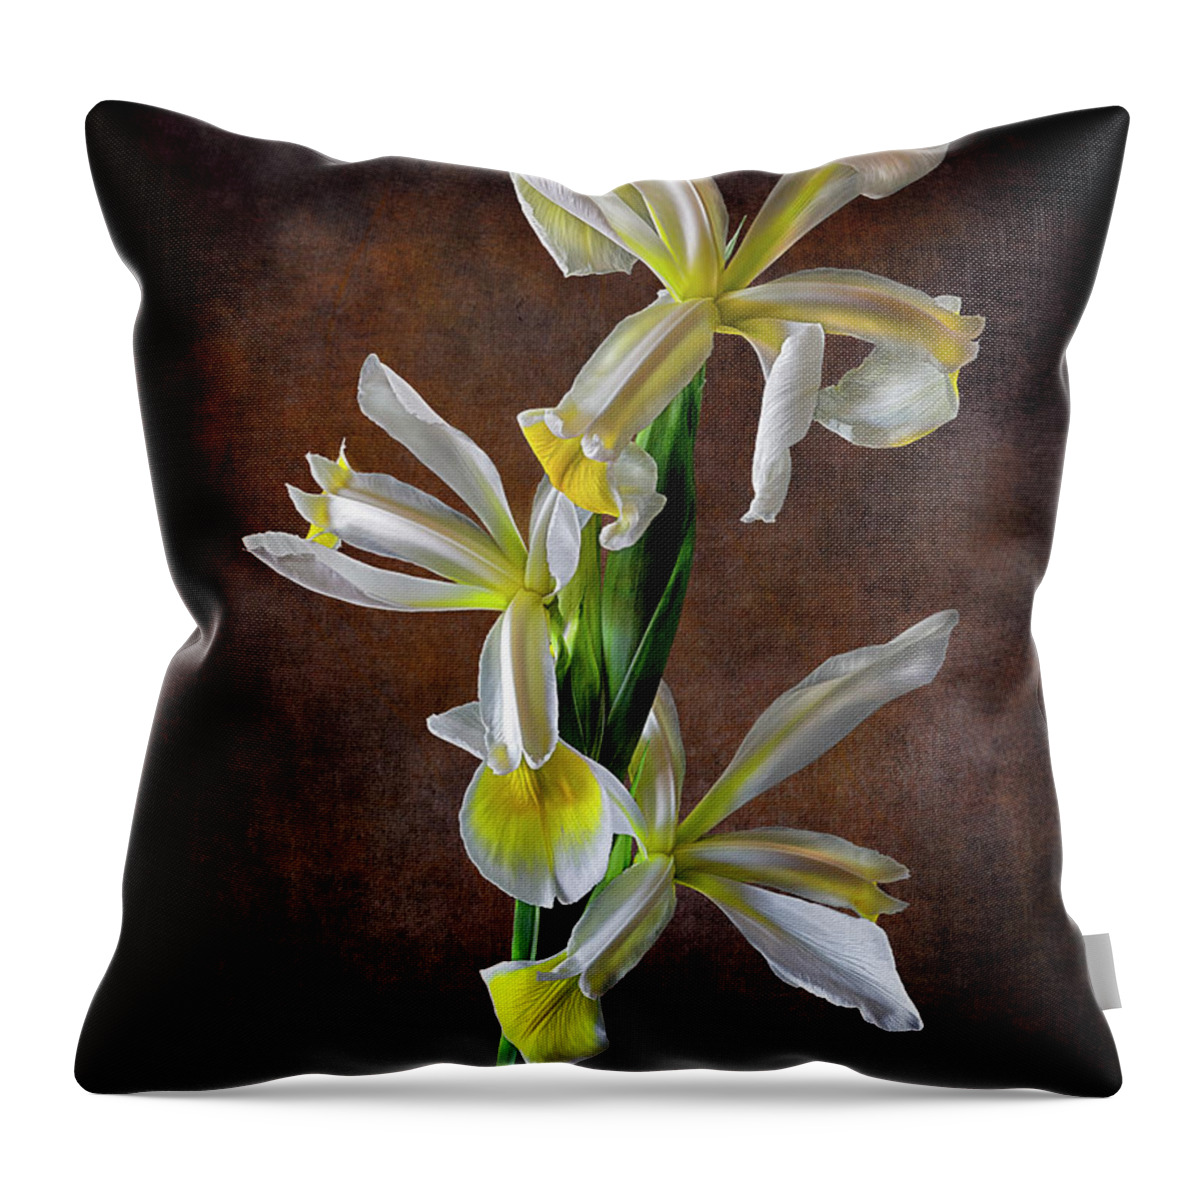 Triple White Irises Throw Pillow featuring the photograph Triple White Irises by Endre Balogh